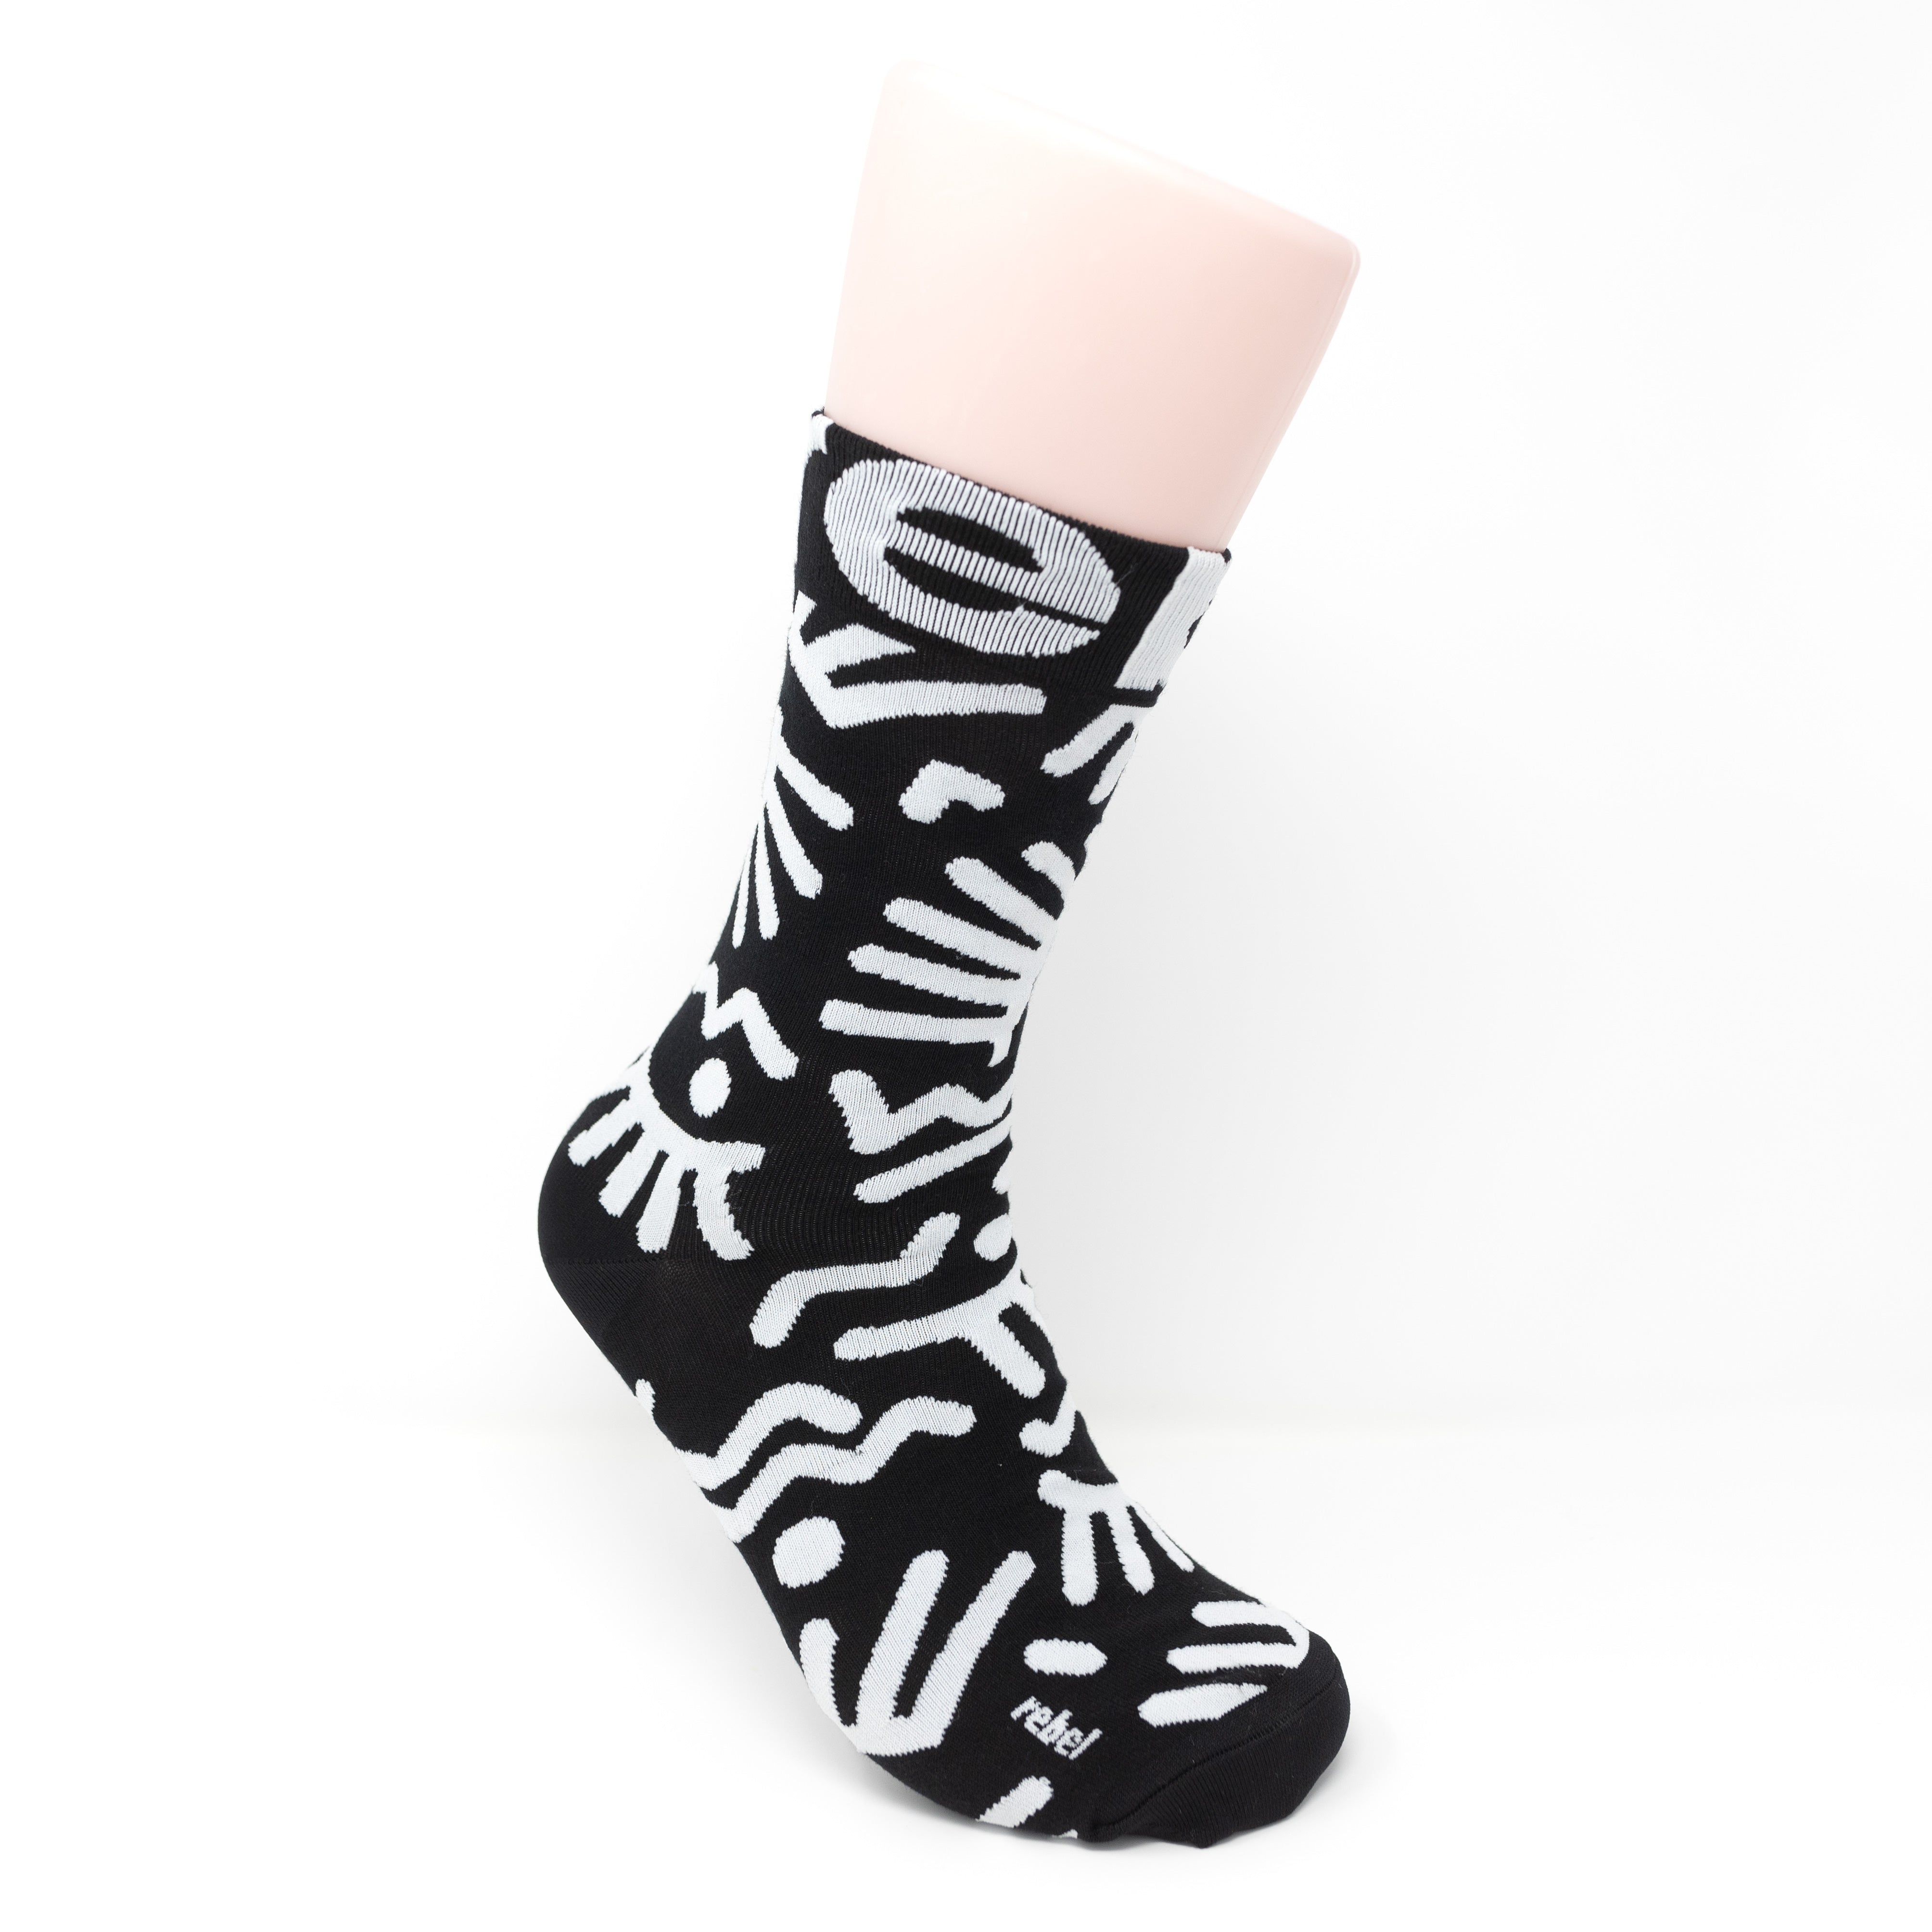 Socks – TomboyX